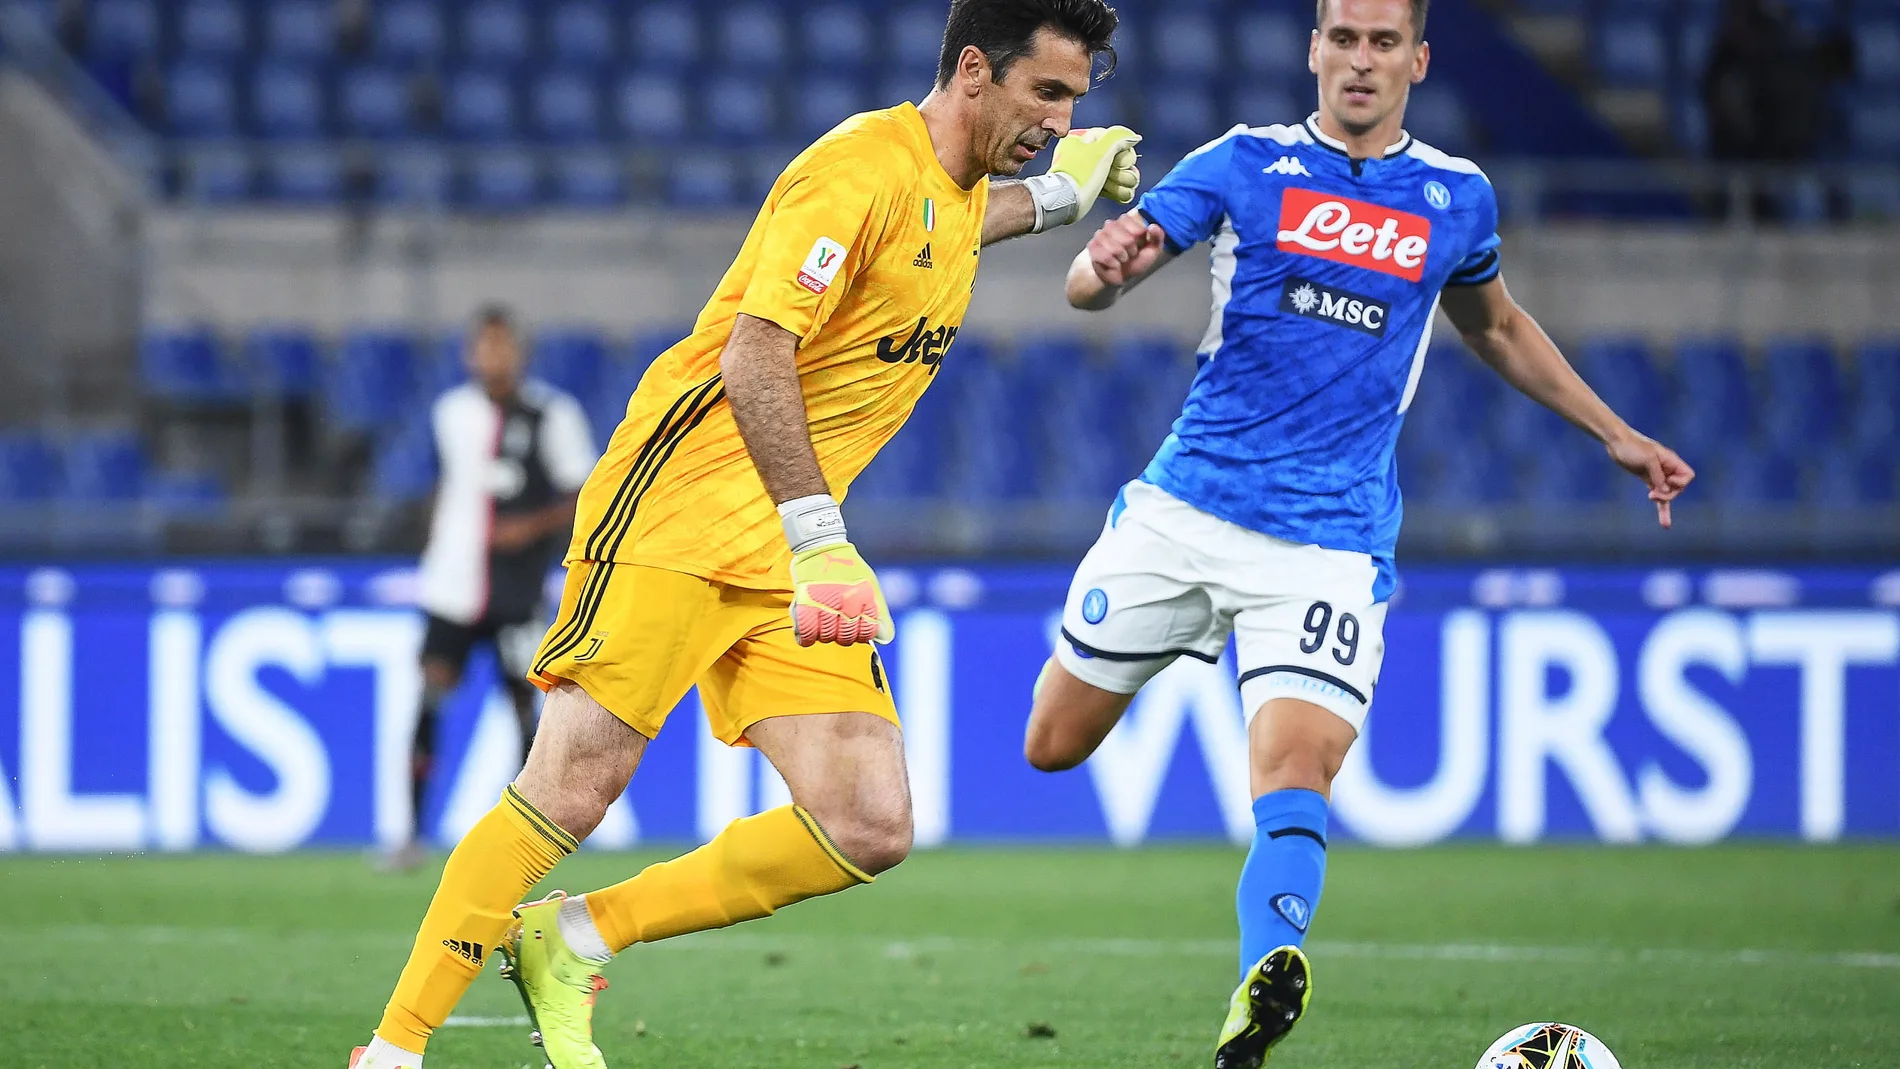 Coppa Italia final - SSC Napoli vs Juventus FC